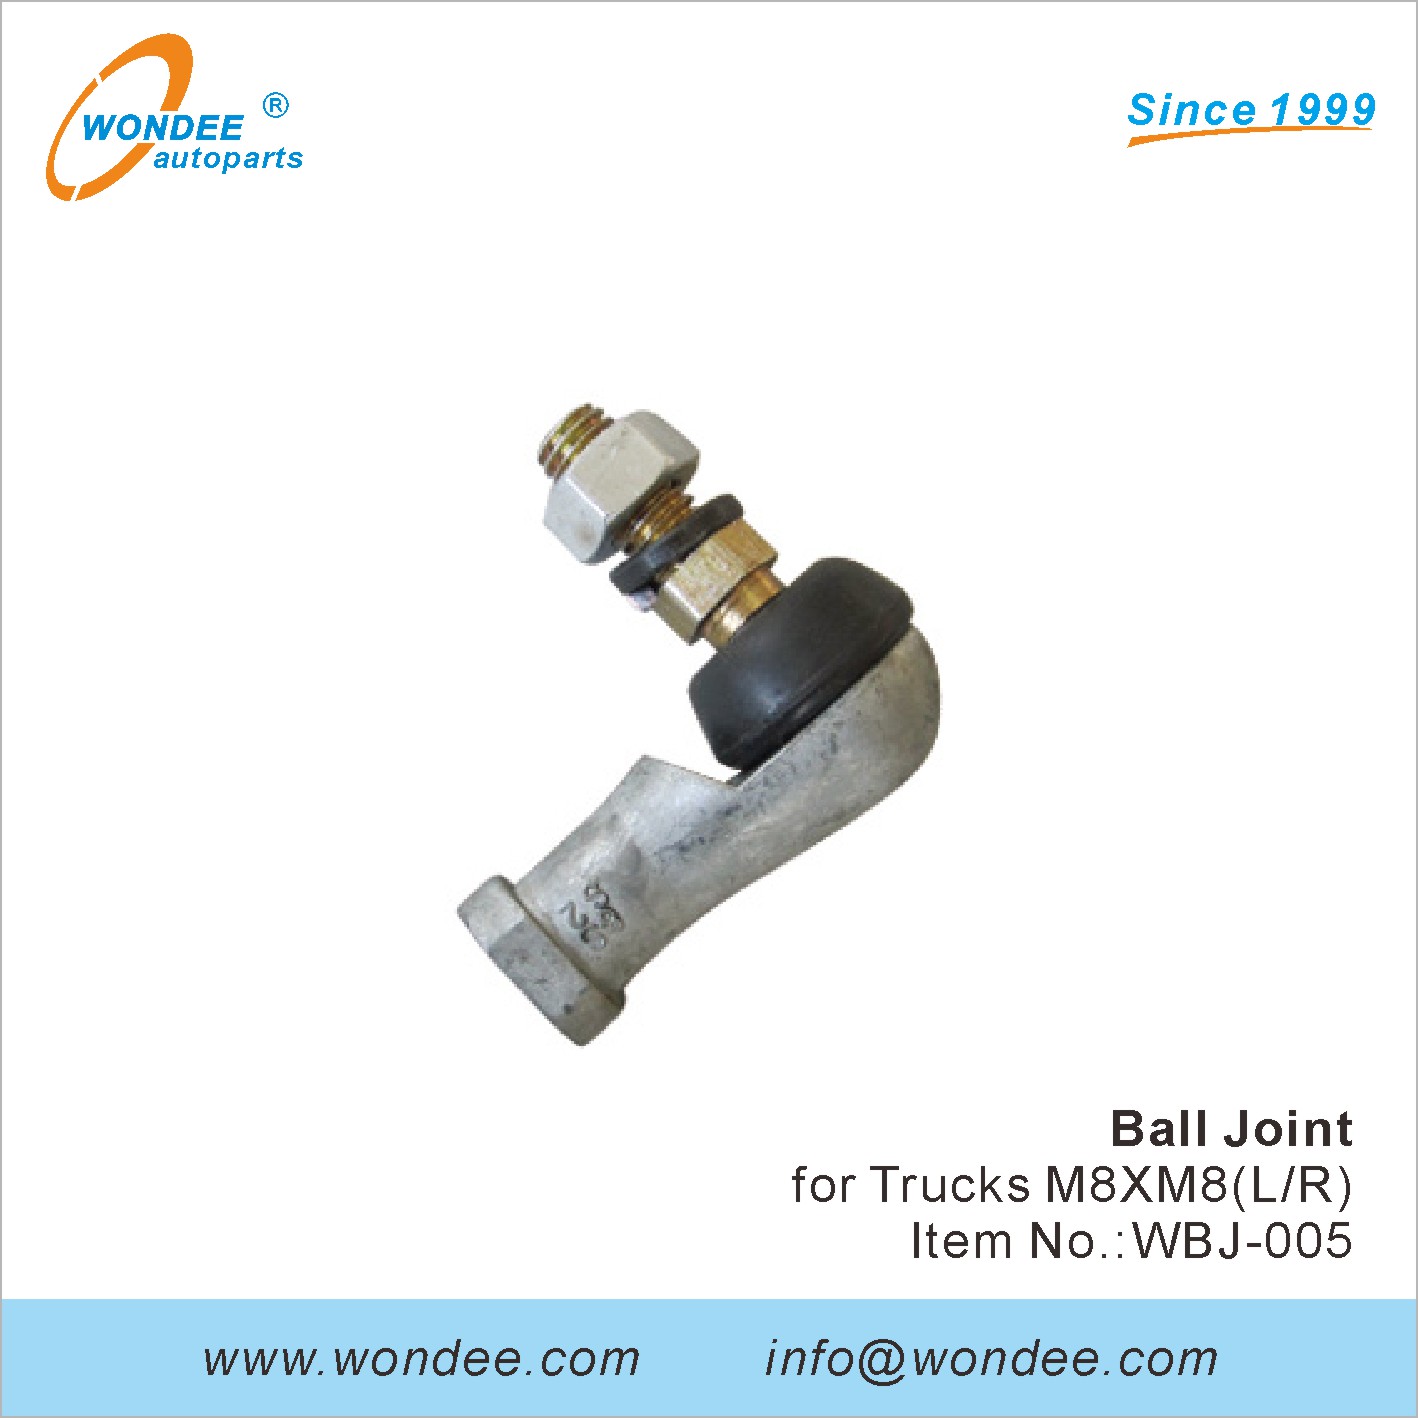 WONDEE ball joint (5)